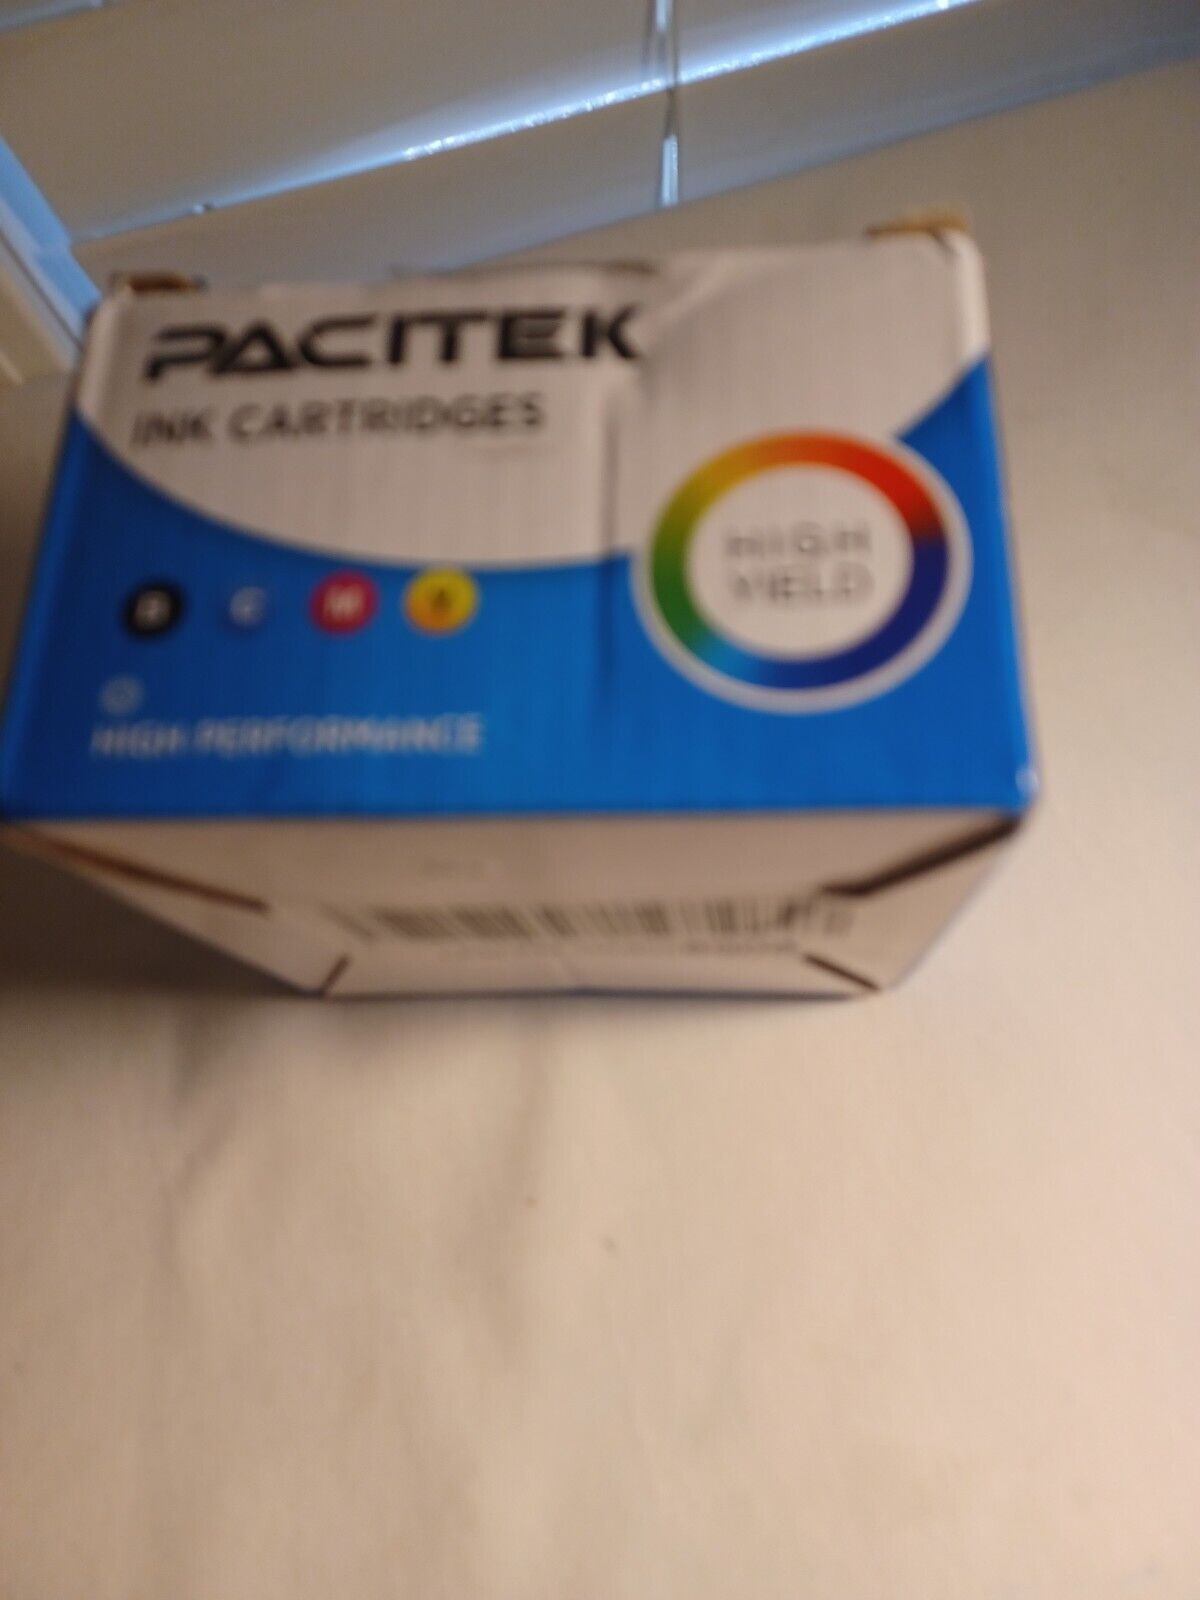 Pacitek Ink Cartridges Package Open Box Black Open Plastic Rest Sealed